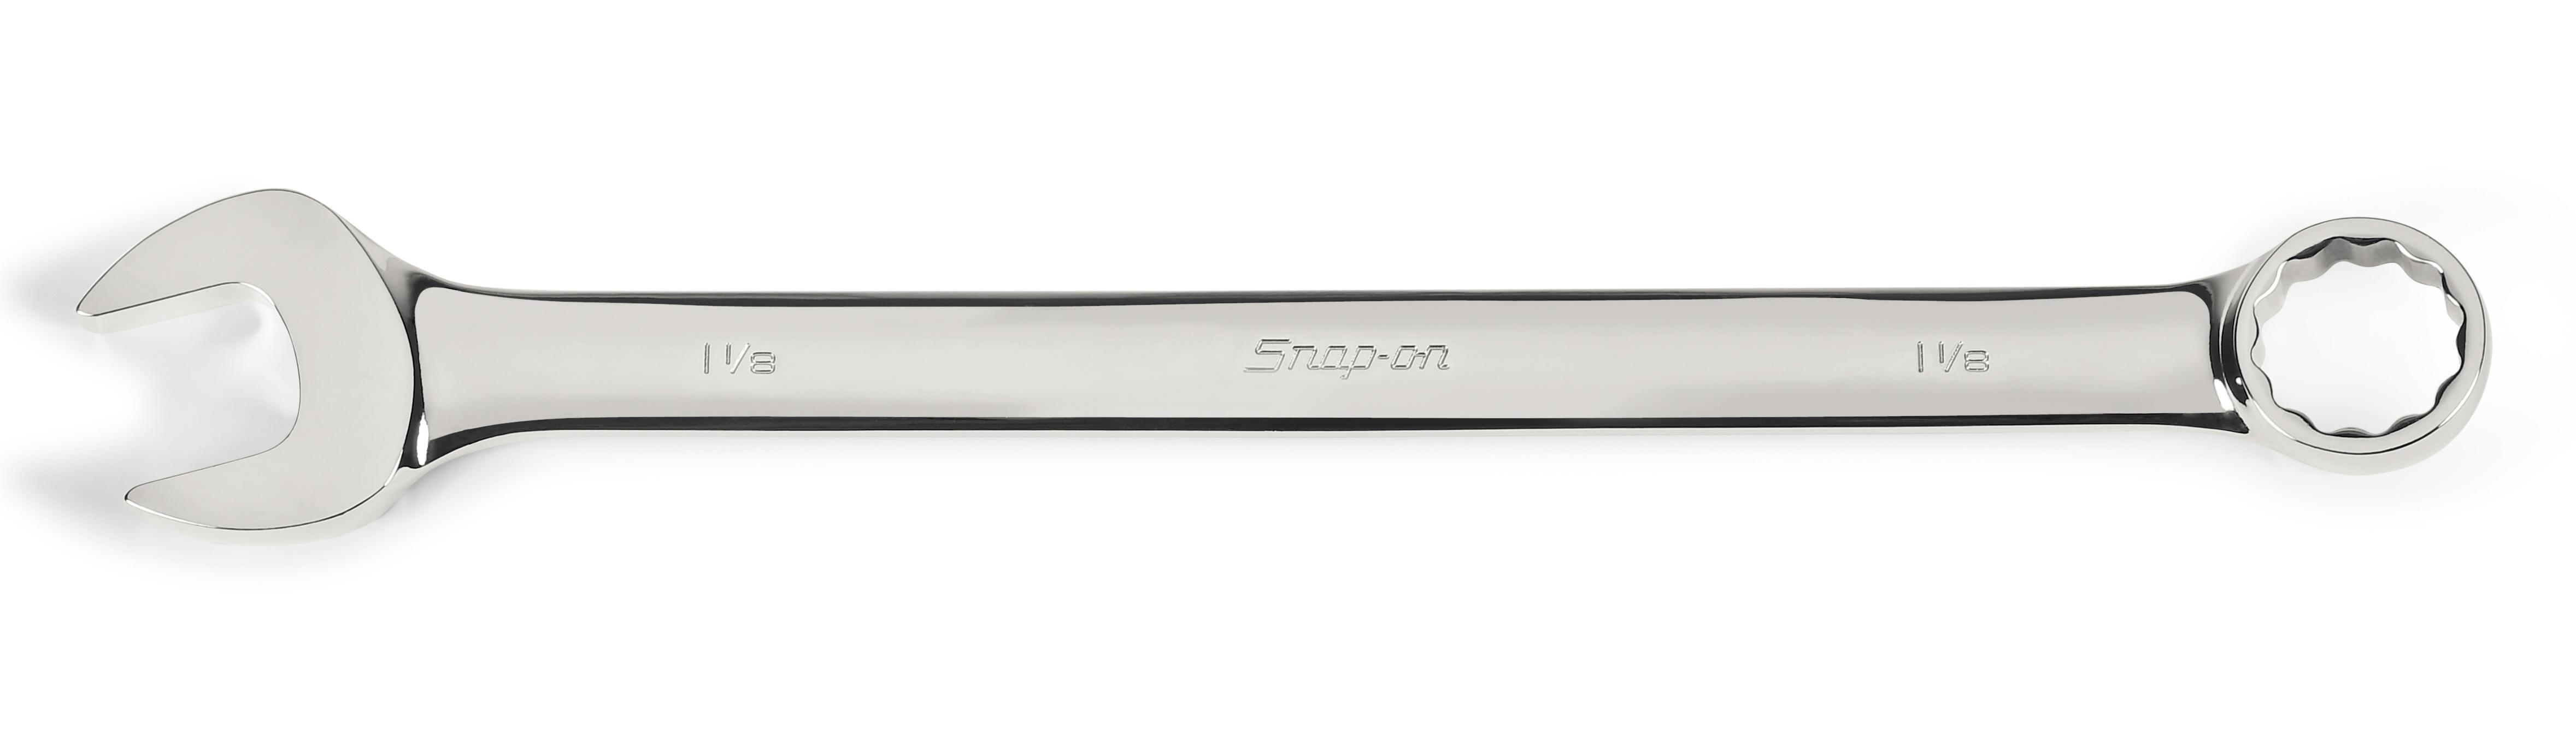 NEW Snap-On Tools USA 9/16" SAE 6pt Short Length Chrome Combo Wrench OXA180 